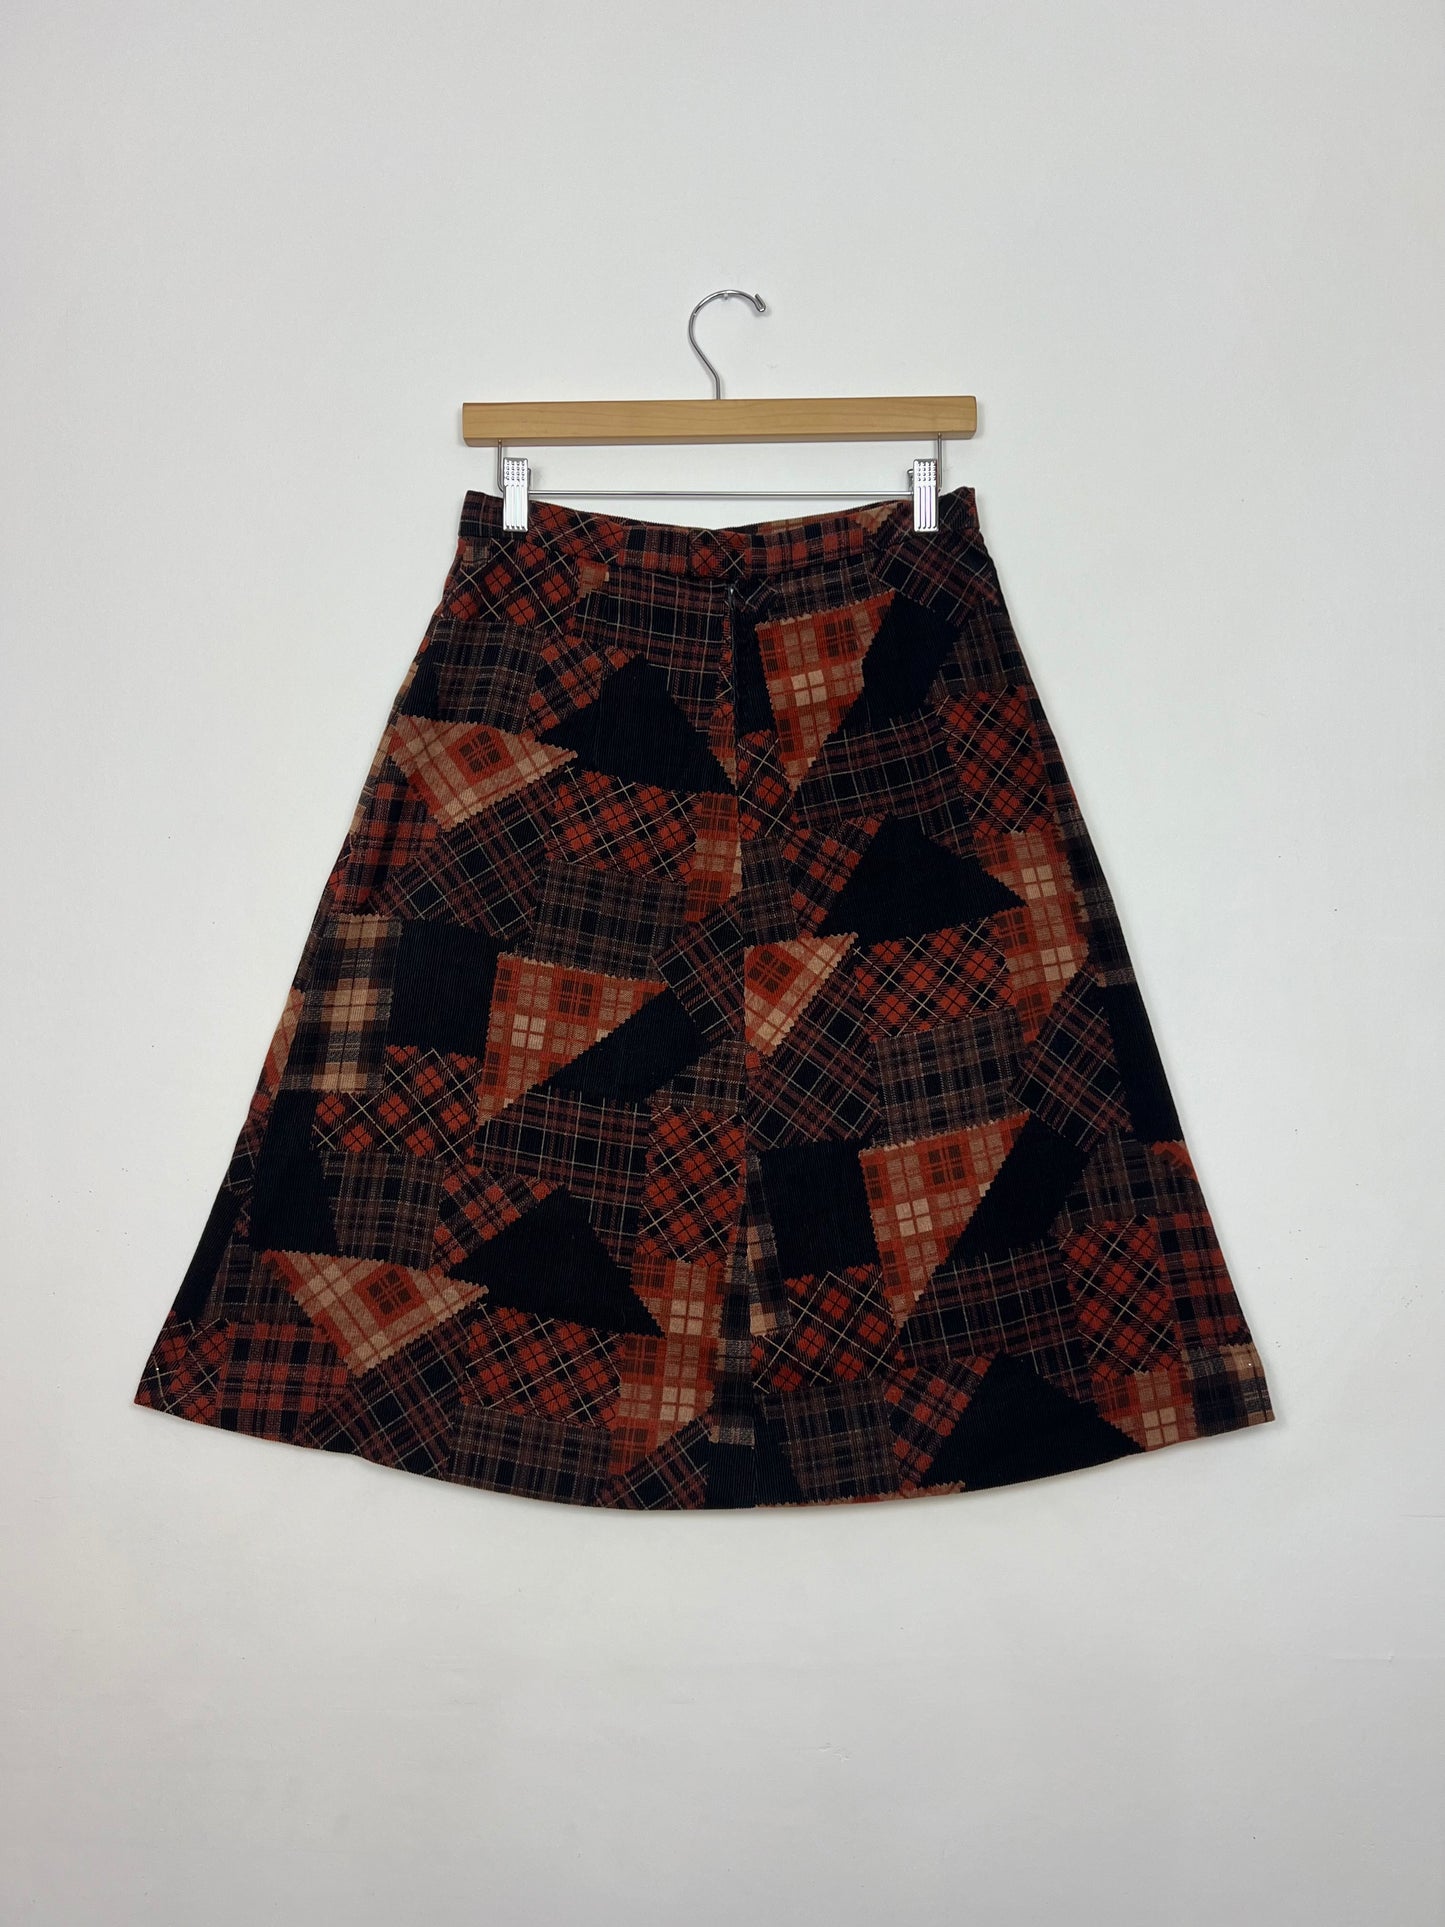 1970's Handmade Plaid Patchwork Printed Skirt